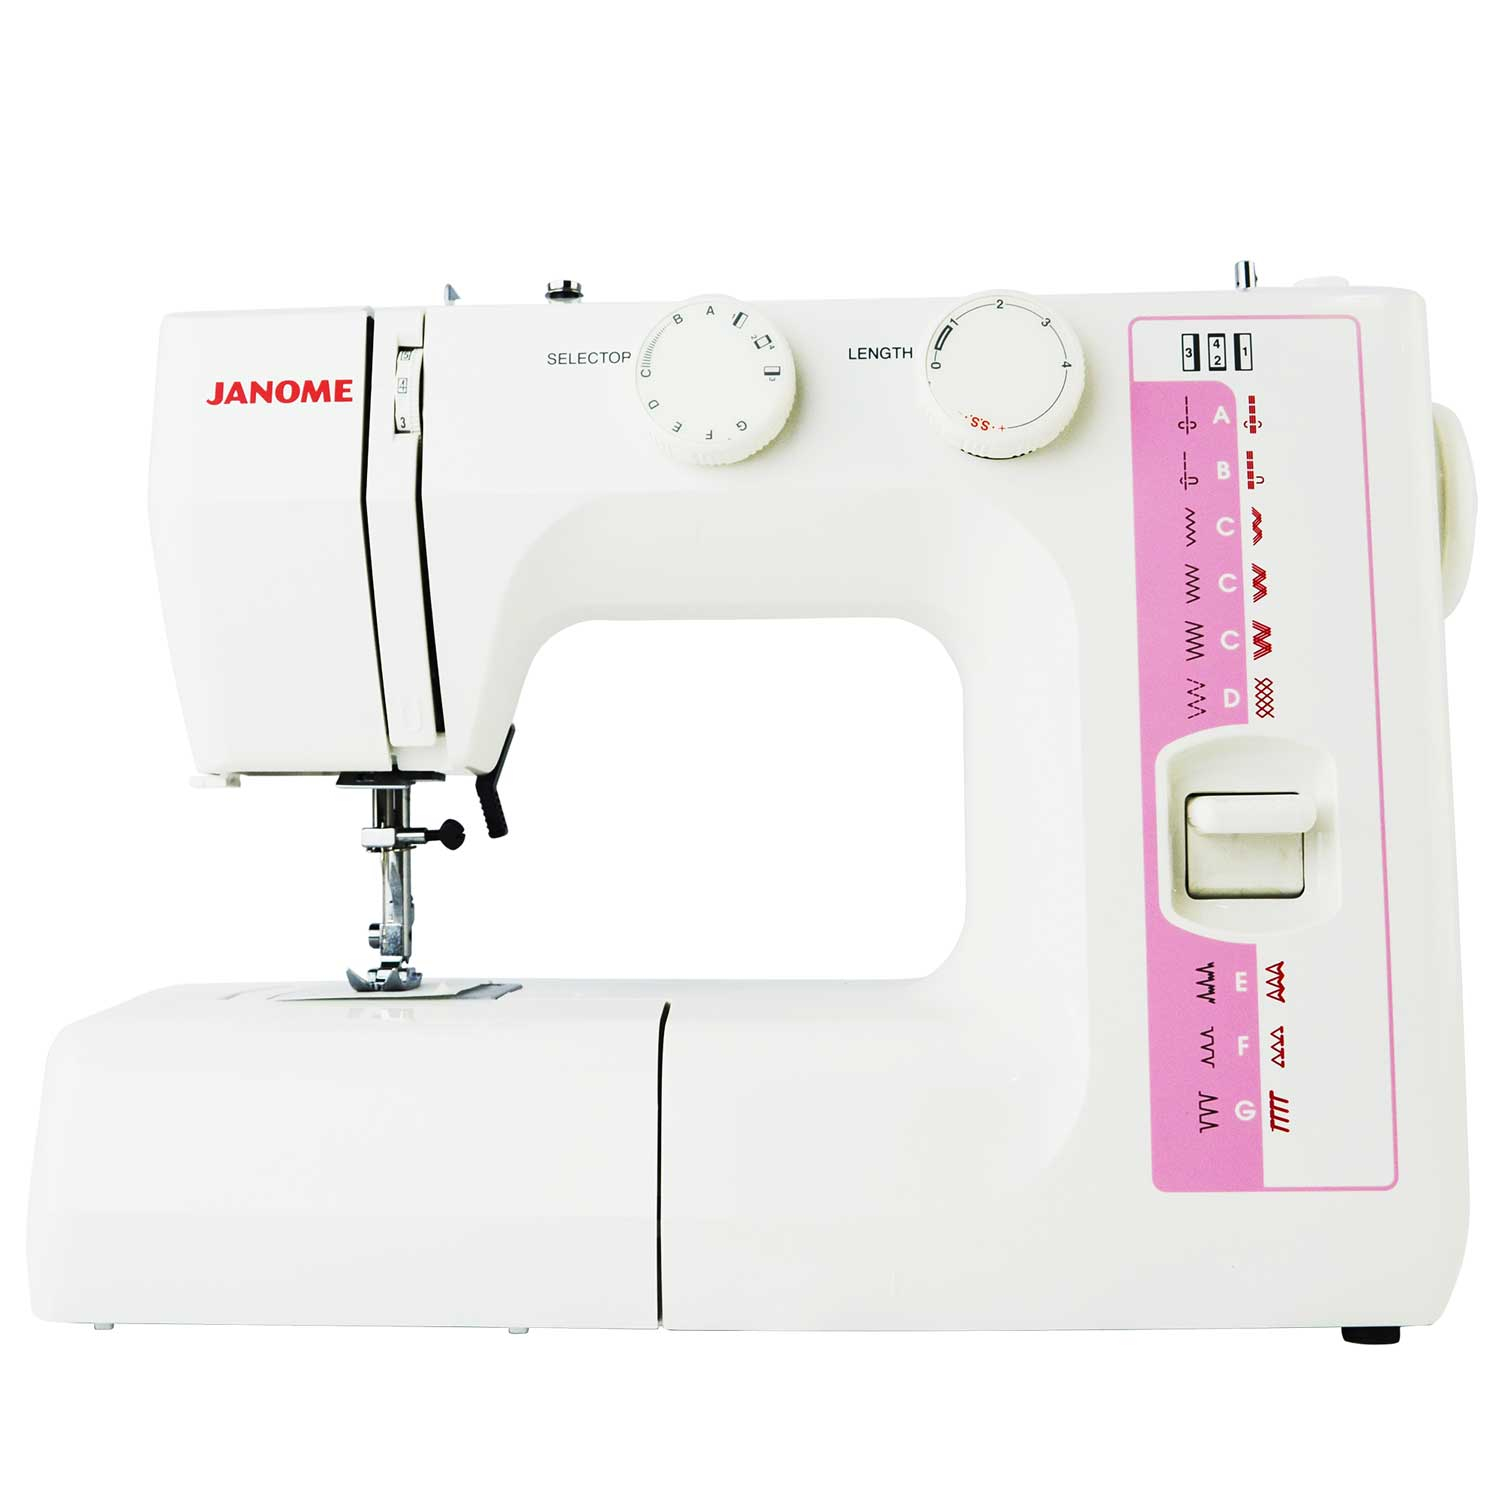 Janome Embroidery Patterns Janome Re1712 Sewing Machine